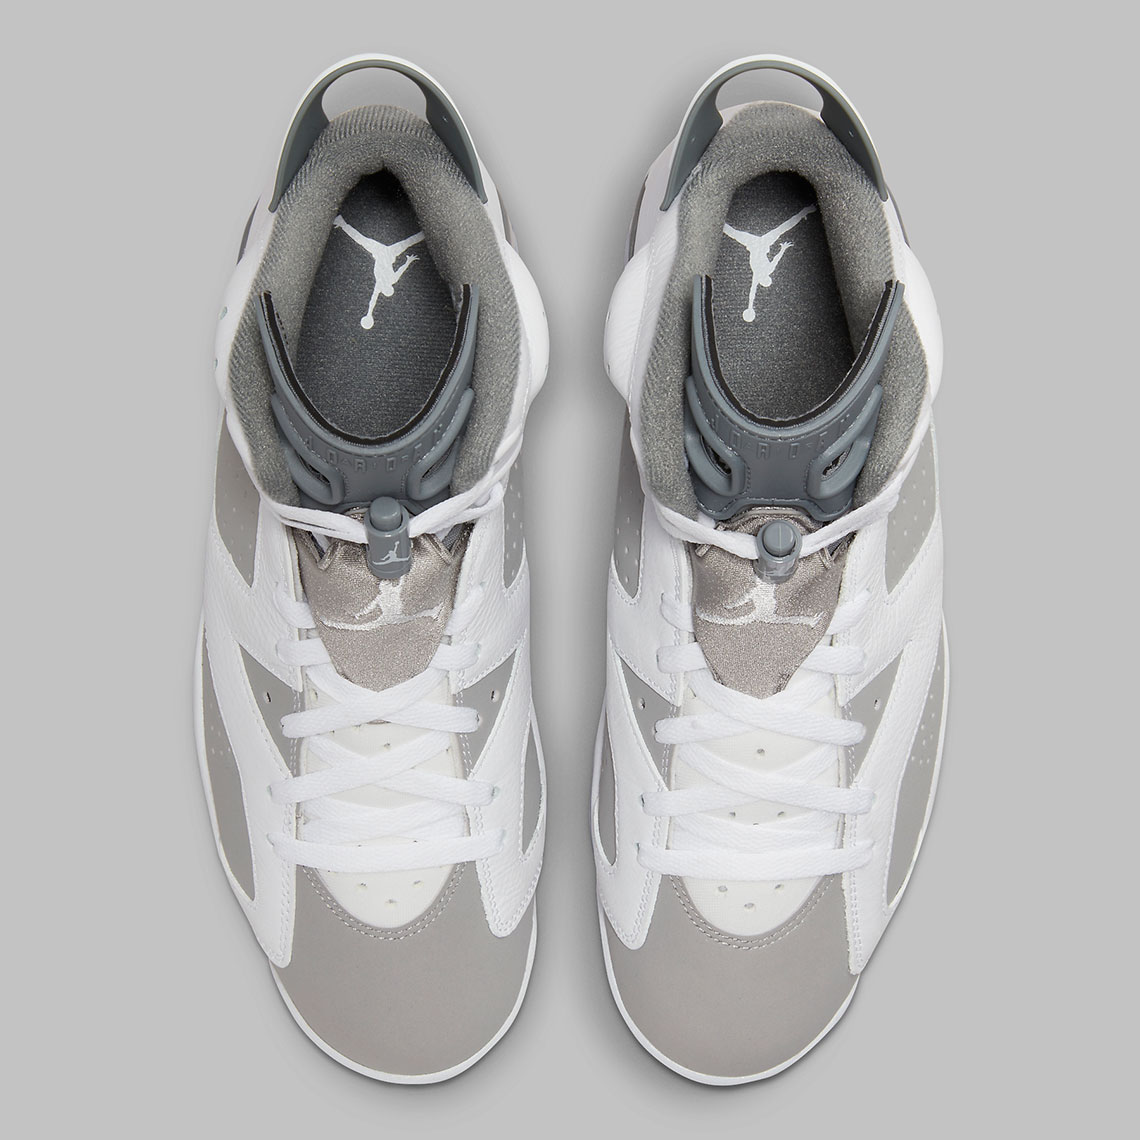 the Air Jordan Saint-GerSneaker 9 NRG Boot drops on White Medium Grey Cool Grey Ct8529 100 2